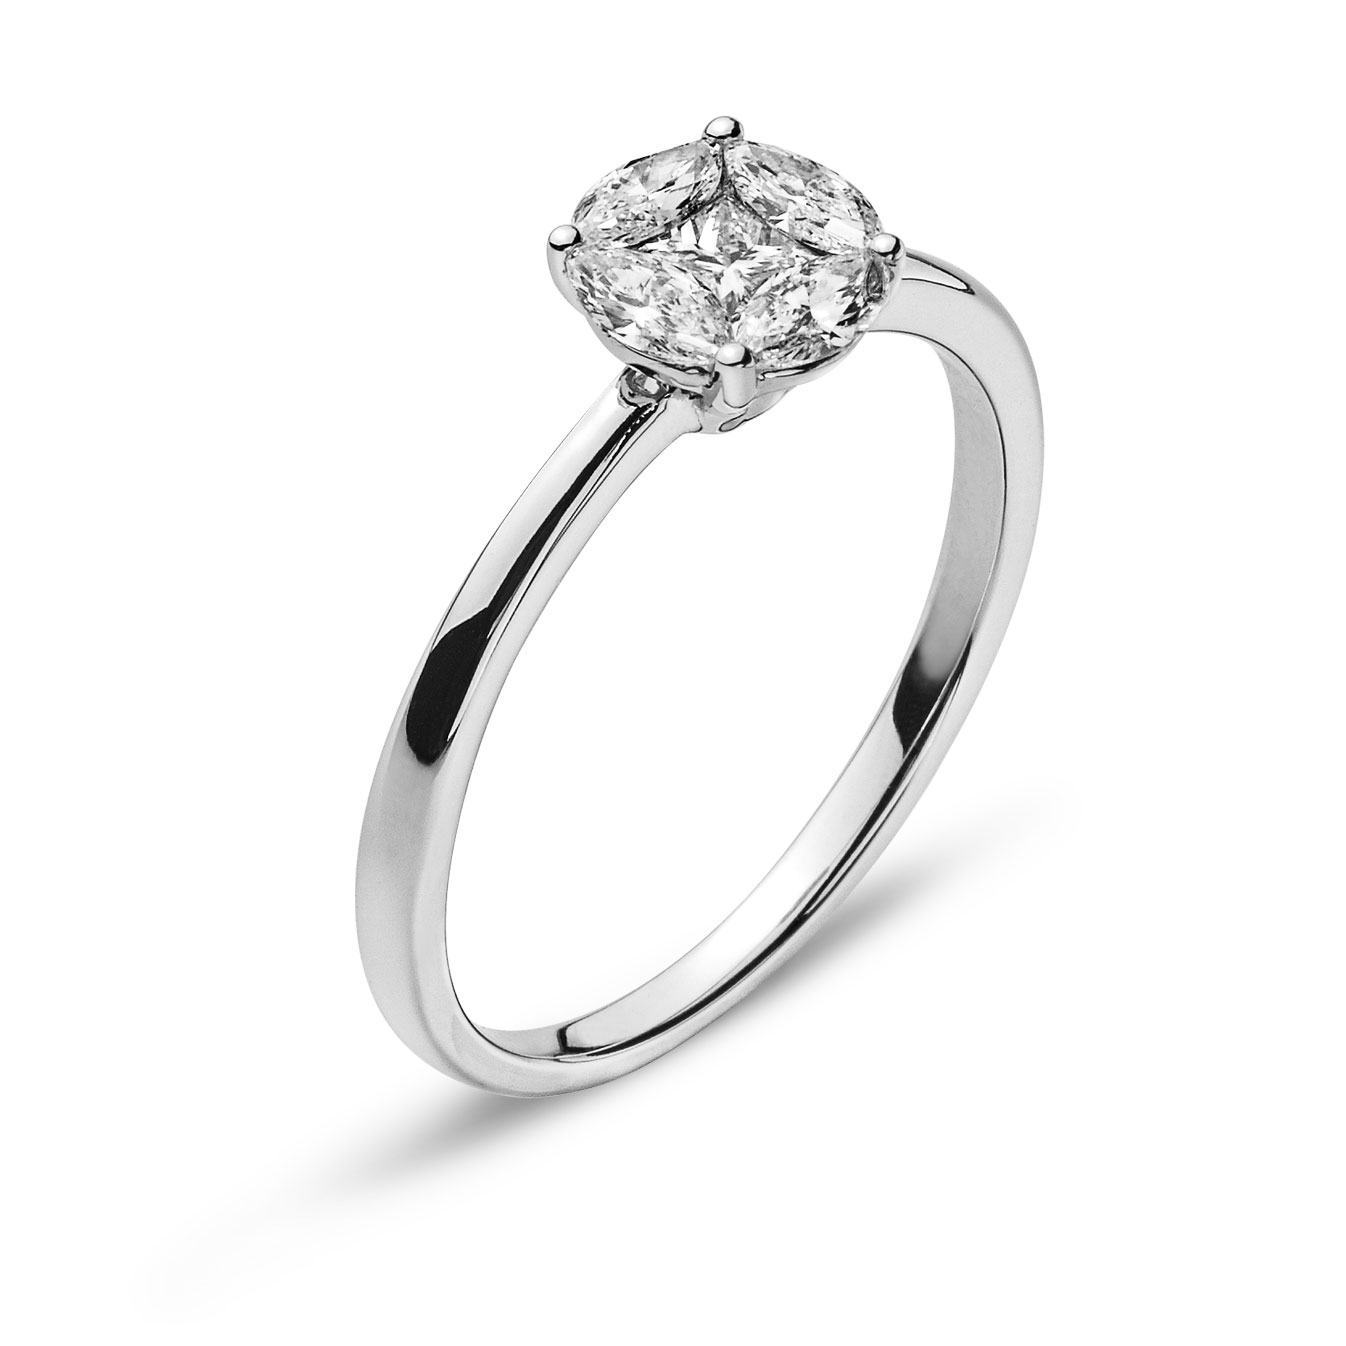 AURONOS Prestige Ring White Gold 18K Princess Diamond 0.12ct Marquise Diamonds 0.37ct